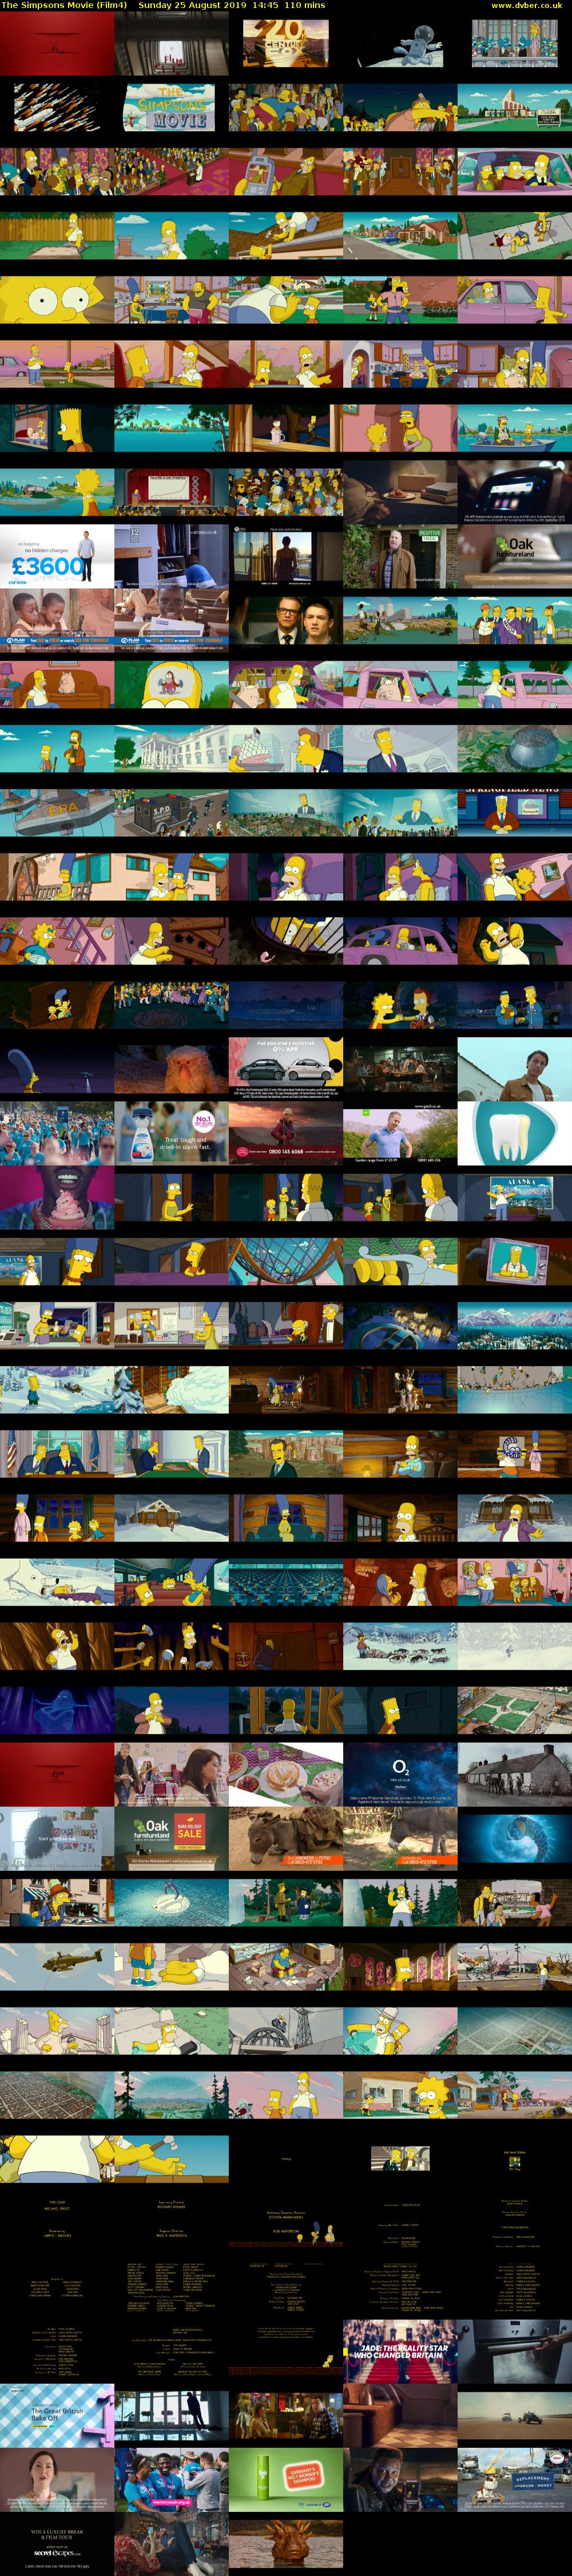 The Simpsons Movie (Film4) Sunday 25 August 2019 14:45 - 16:35